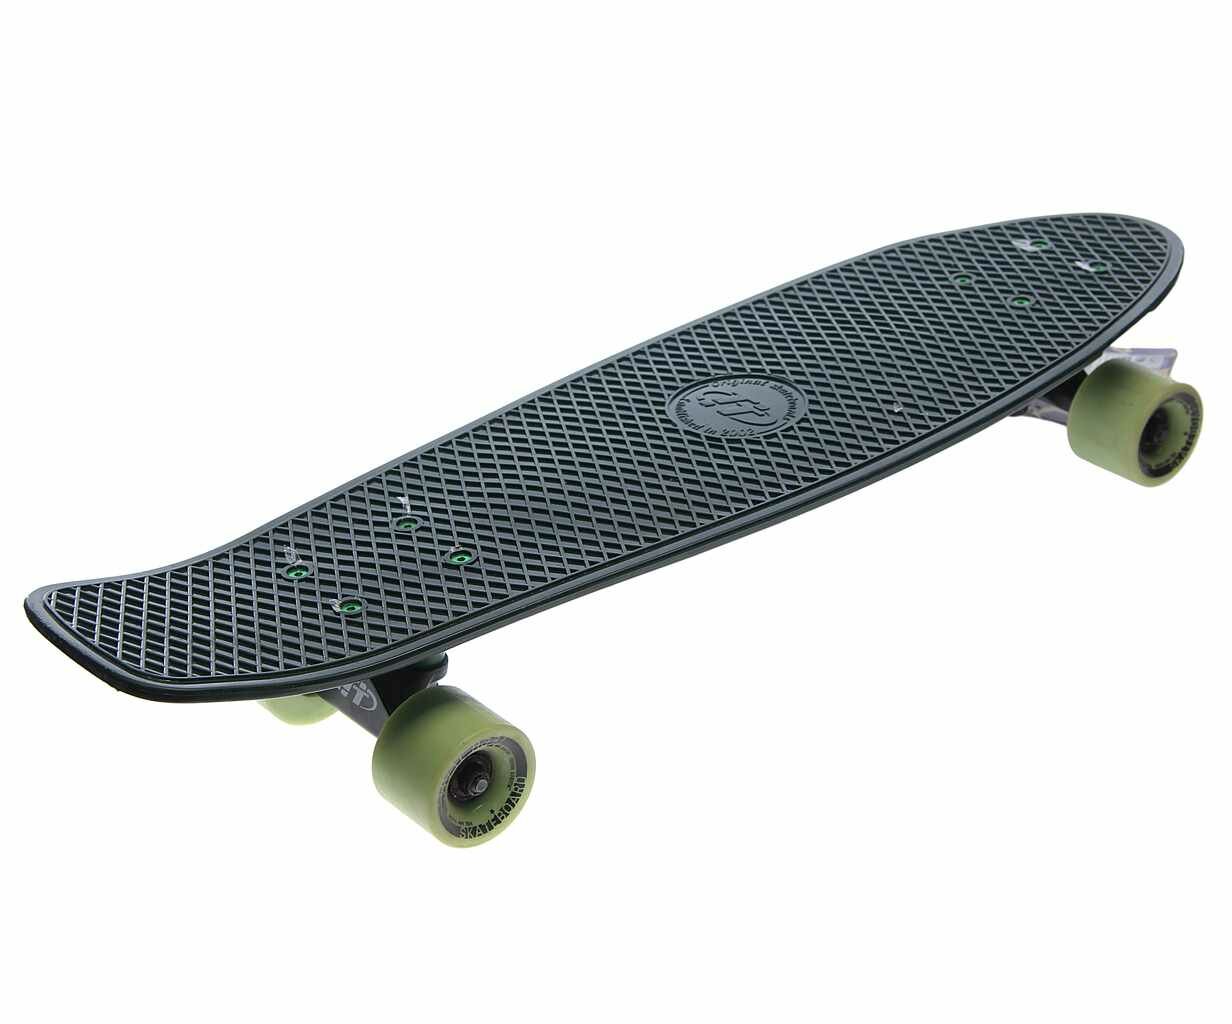 Скейтборд 27" (пенниборд) пластиковый зеленый, NN004174, TECH TEAM